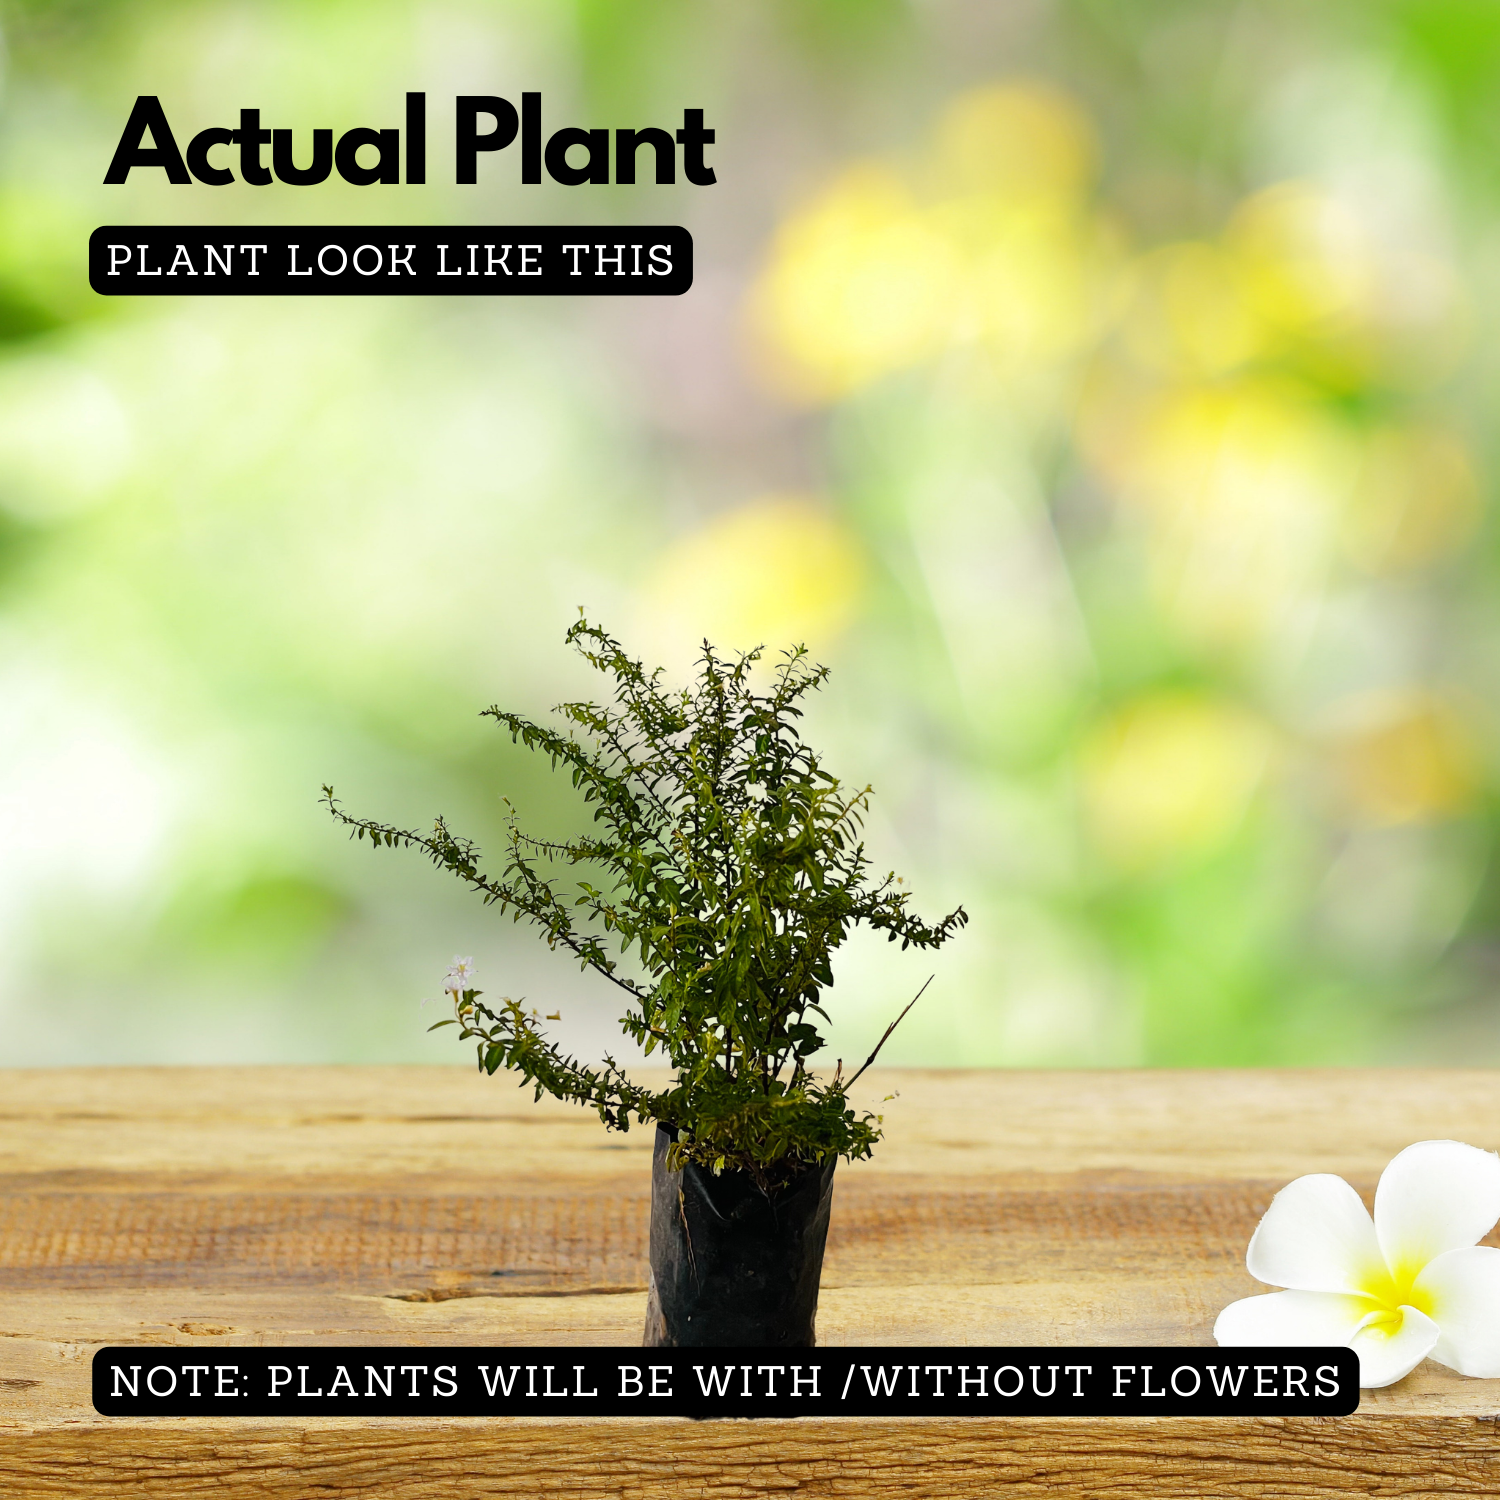 Khufiya Small | Cuphea Hyssopifolia (Kufiya) (White) Mexican Heather | False Heather Flowering/Ornamental Small Live Plant (Home & Garden)